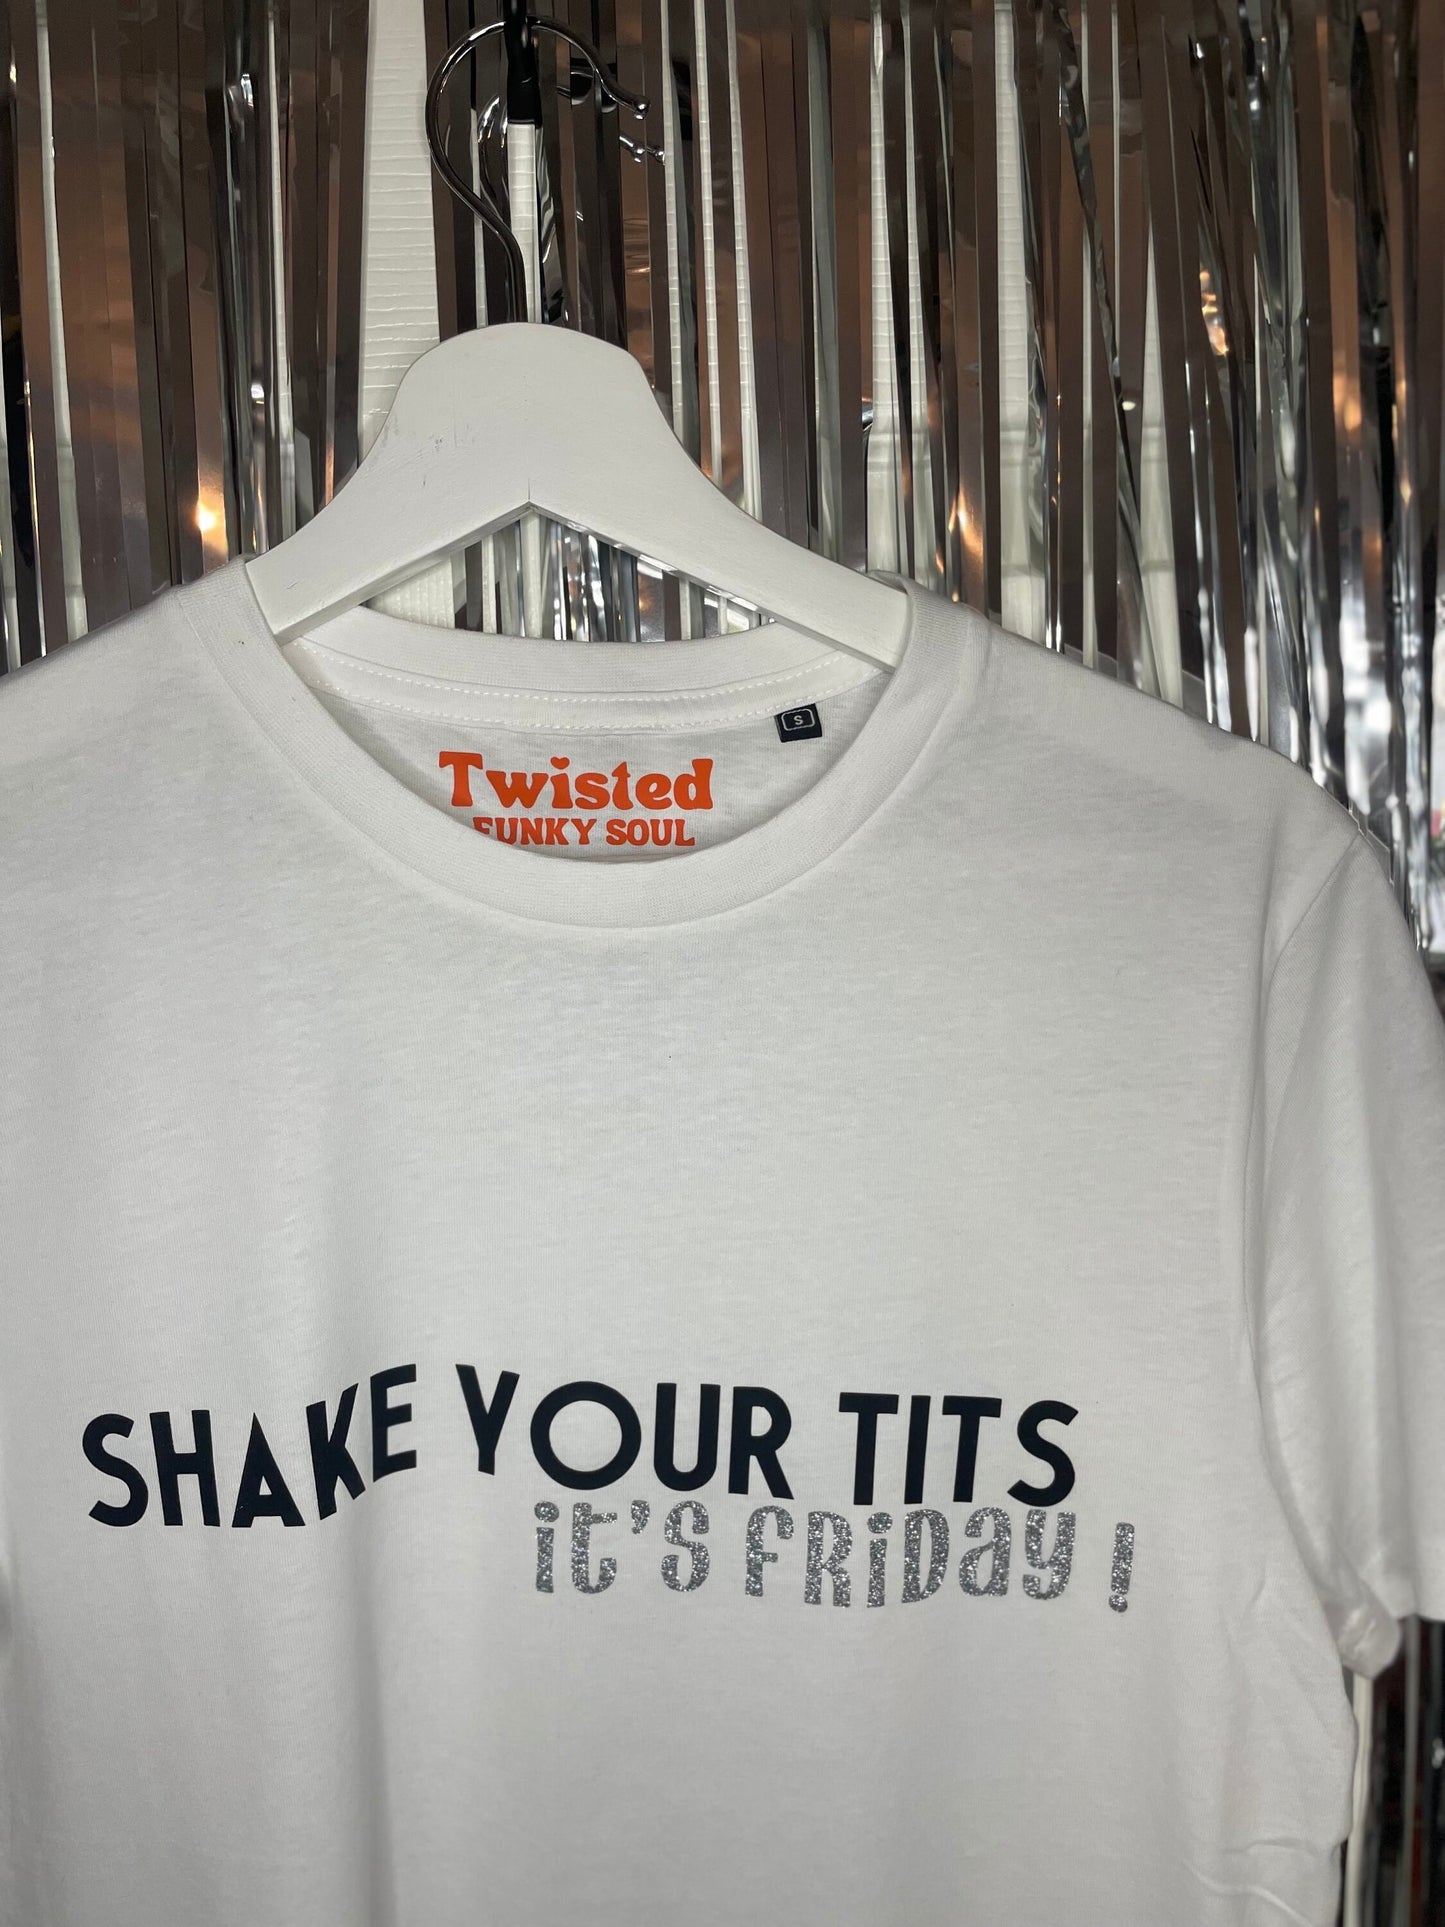 Shake Your Tits It's Friday Slogan T-shirt